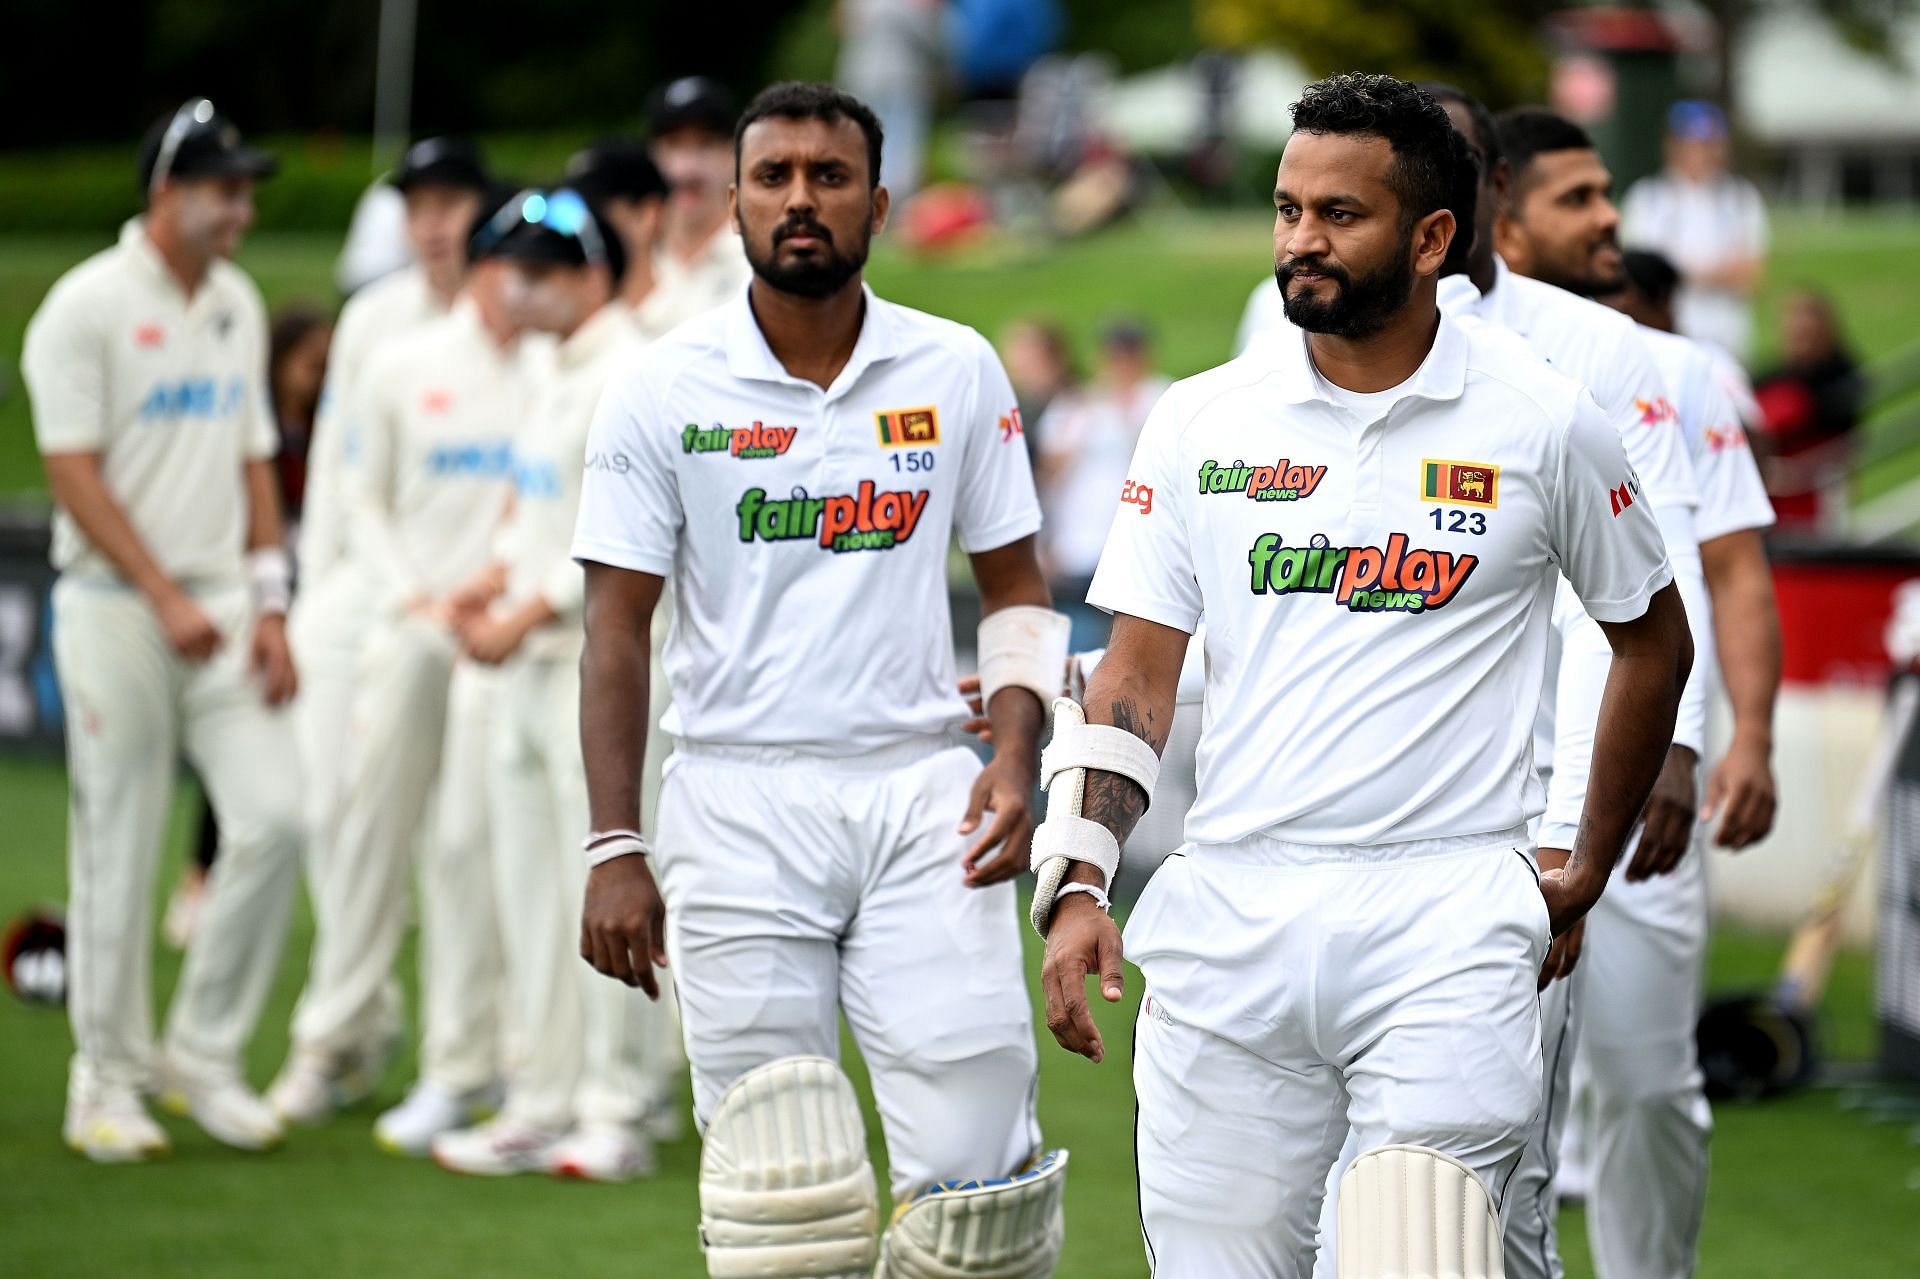 NZ vs SL: 3 reasons why Sri Lanka can upset New Zealand in Test series